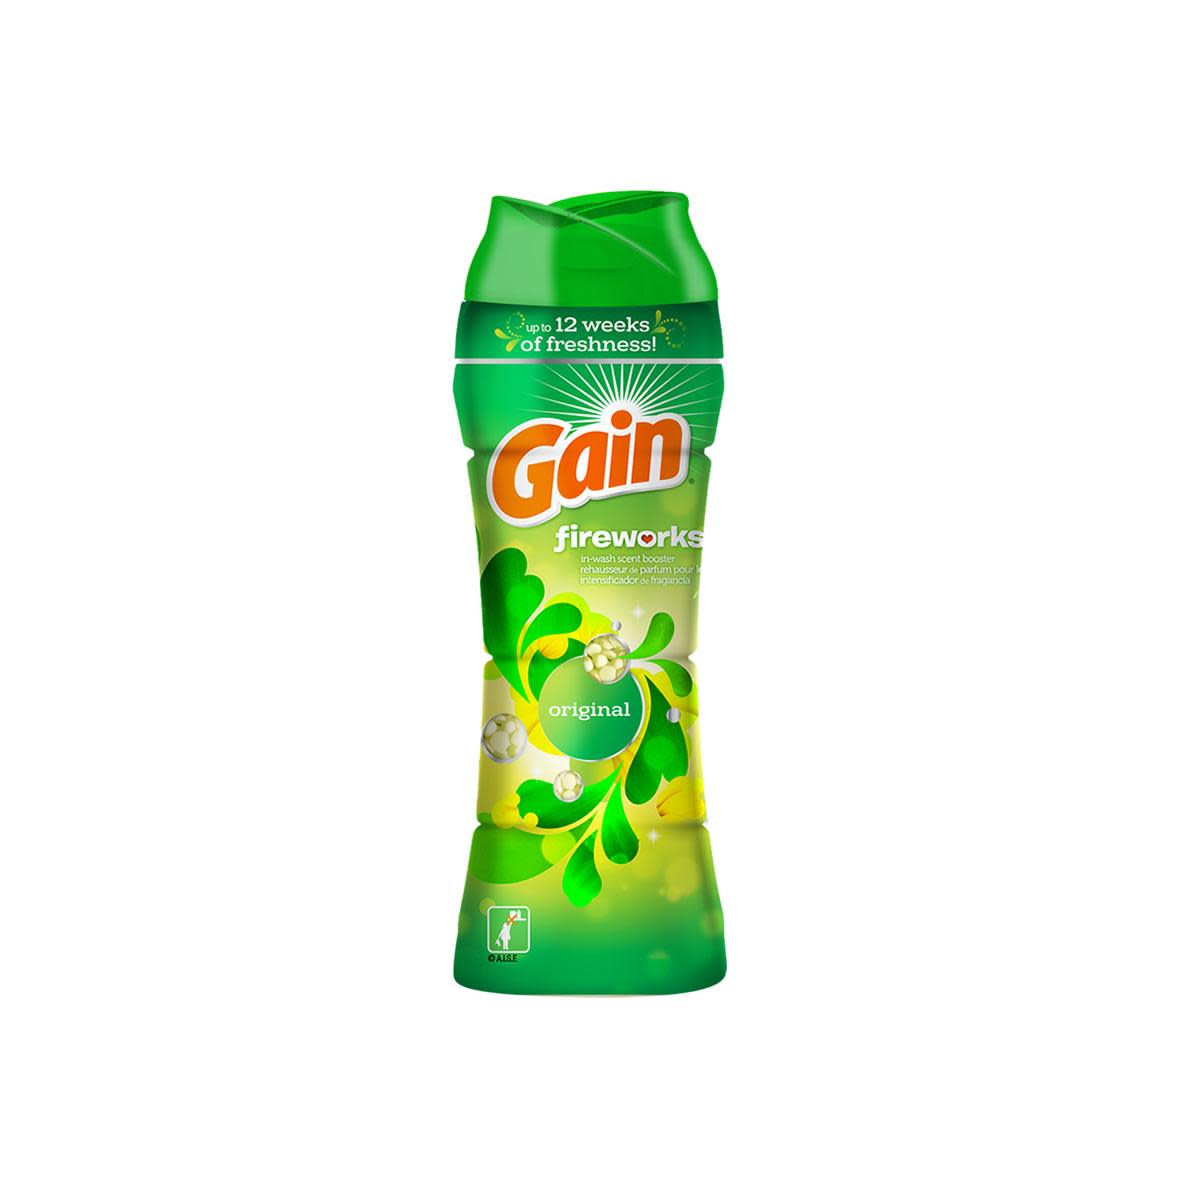 Detergente líquido para ropa Thai Dragon Fruit - Gain